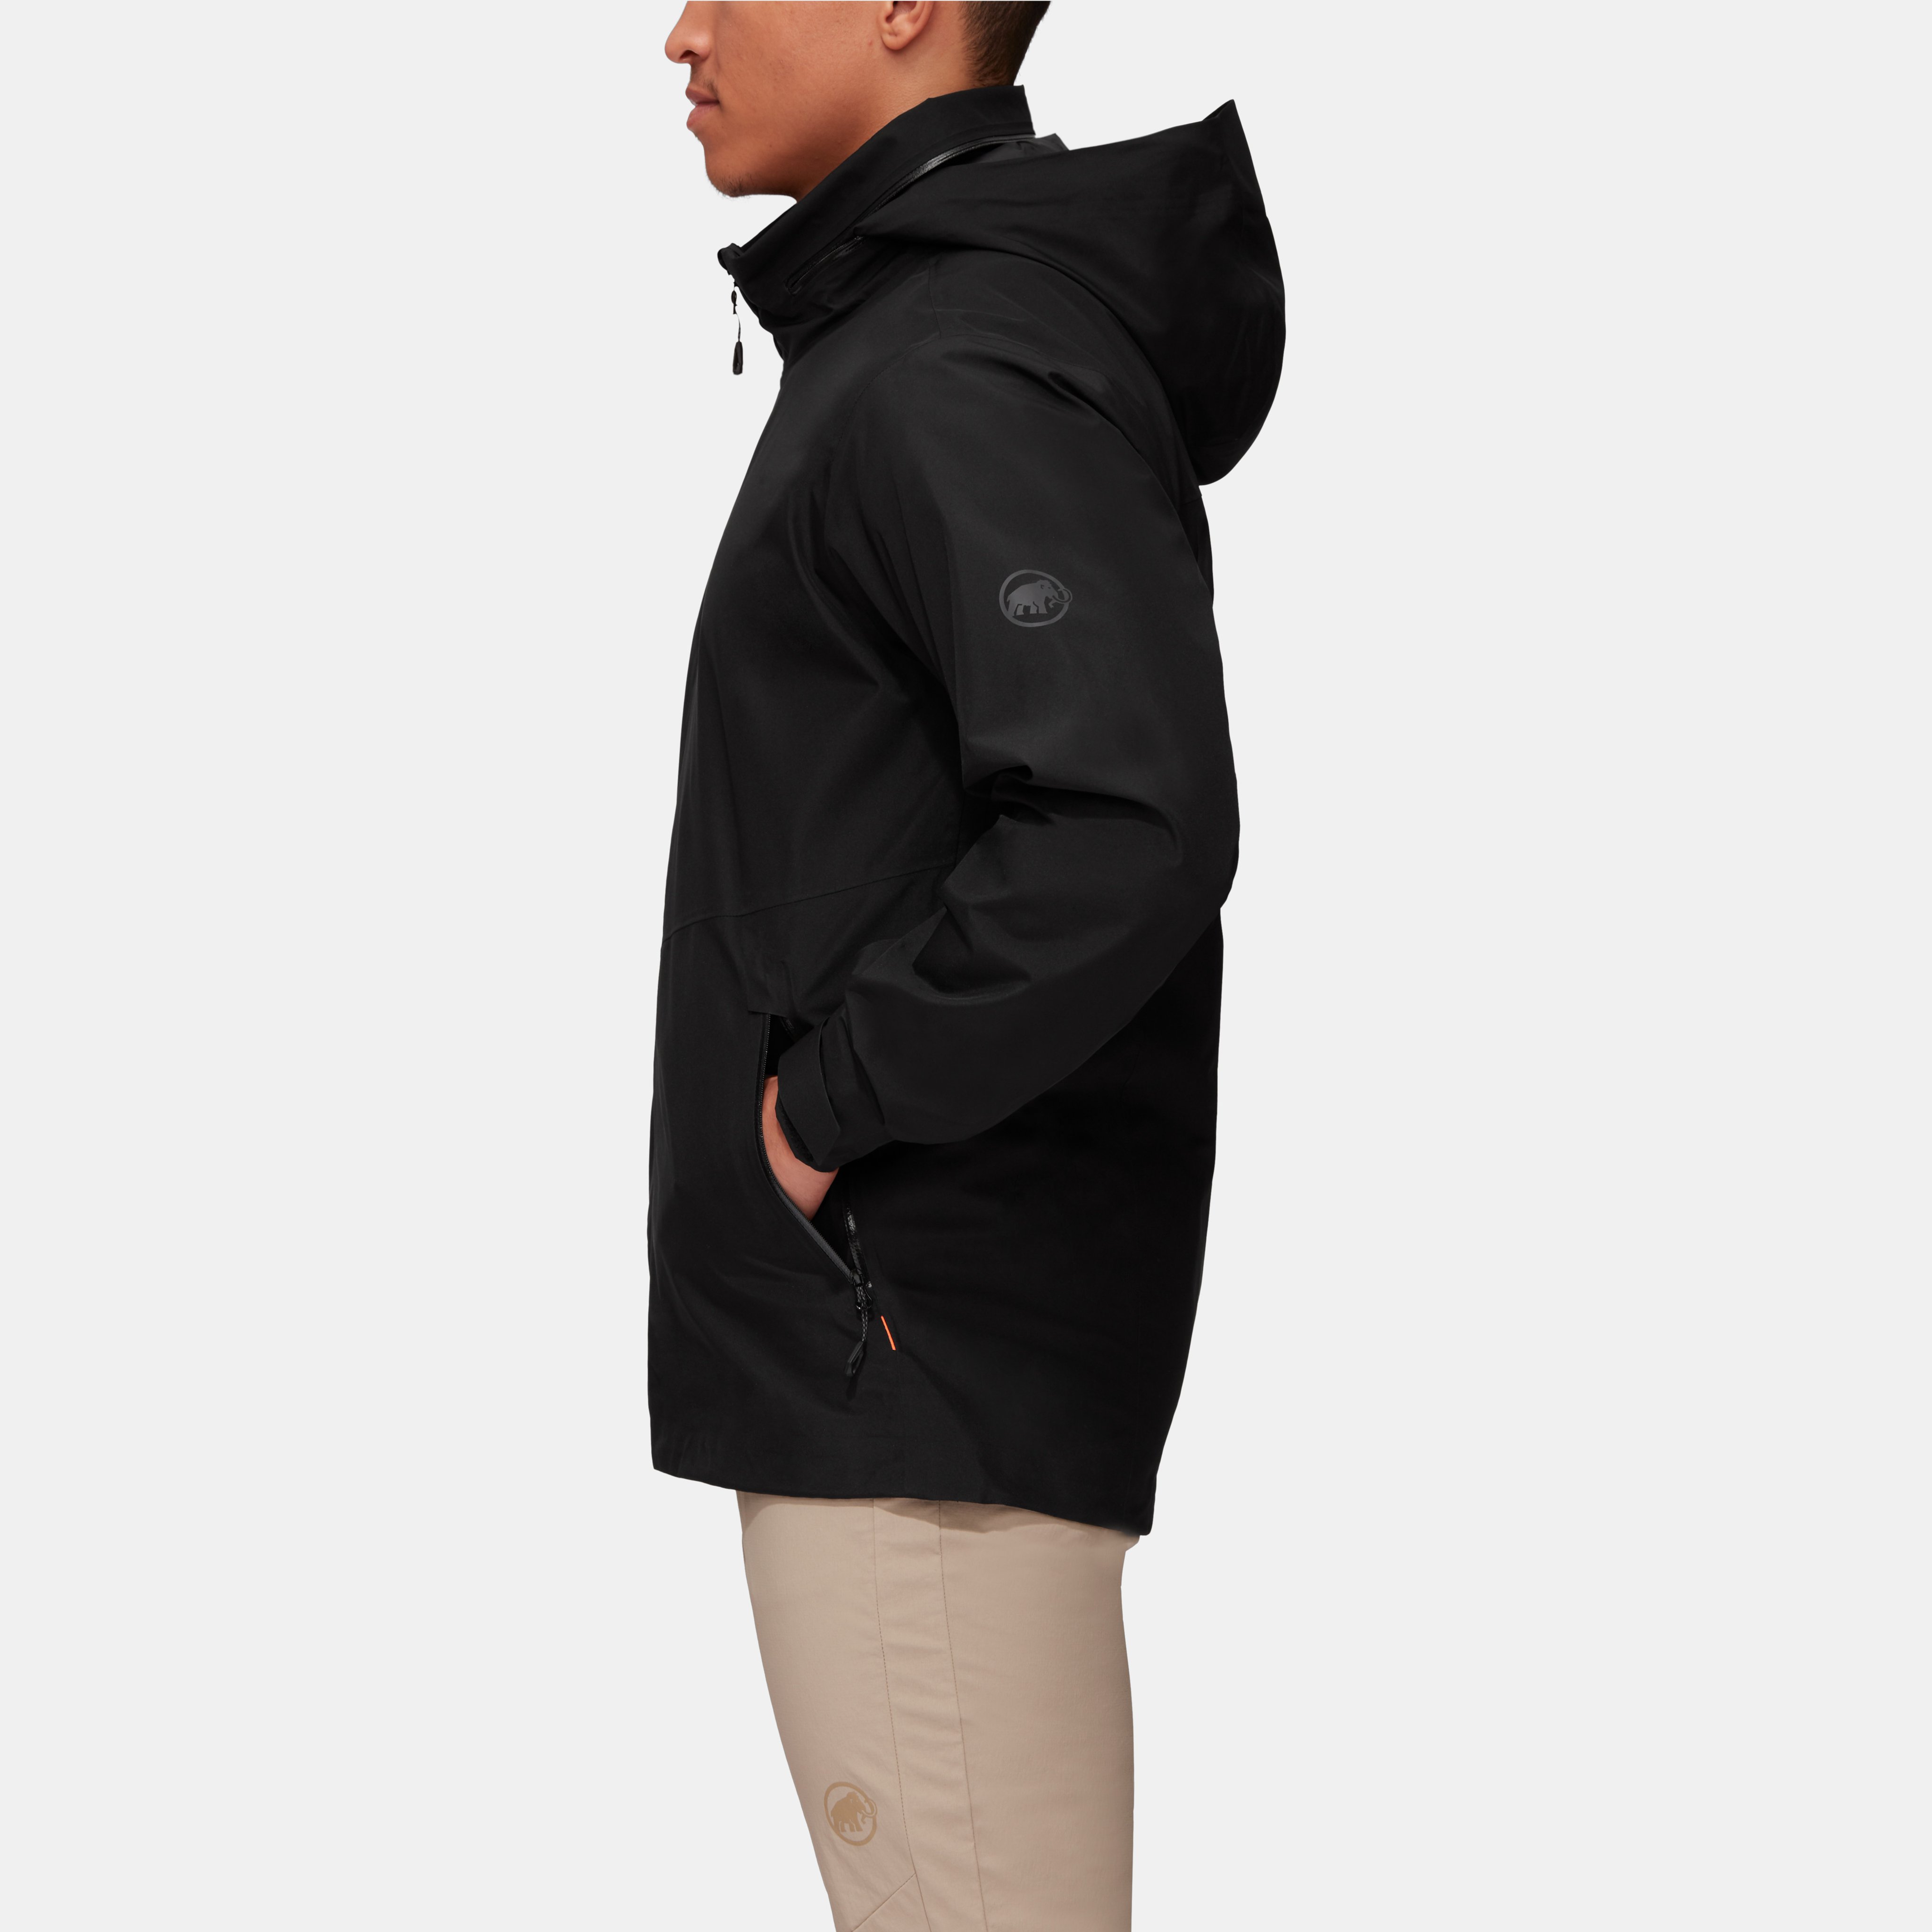 Ayako Tour HS Hooded Jacket Men product image